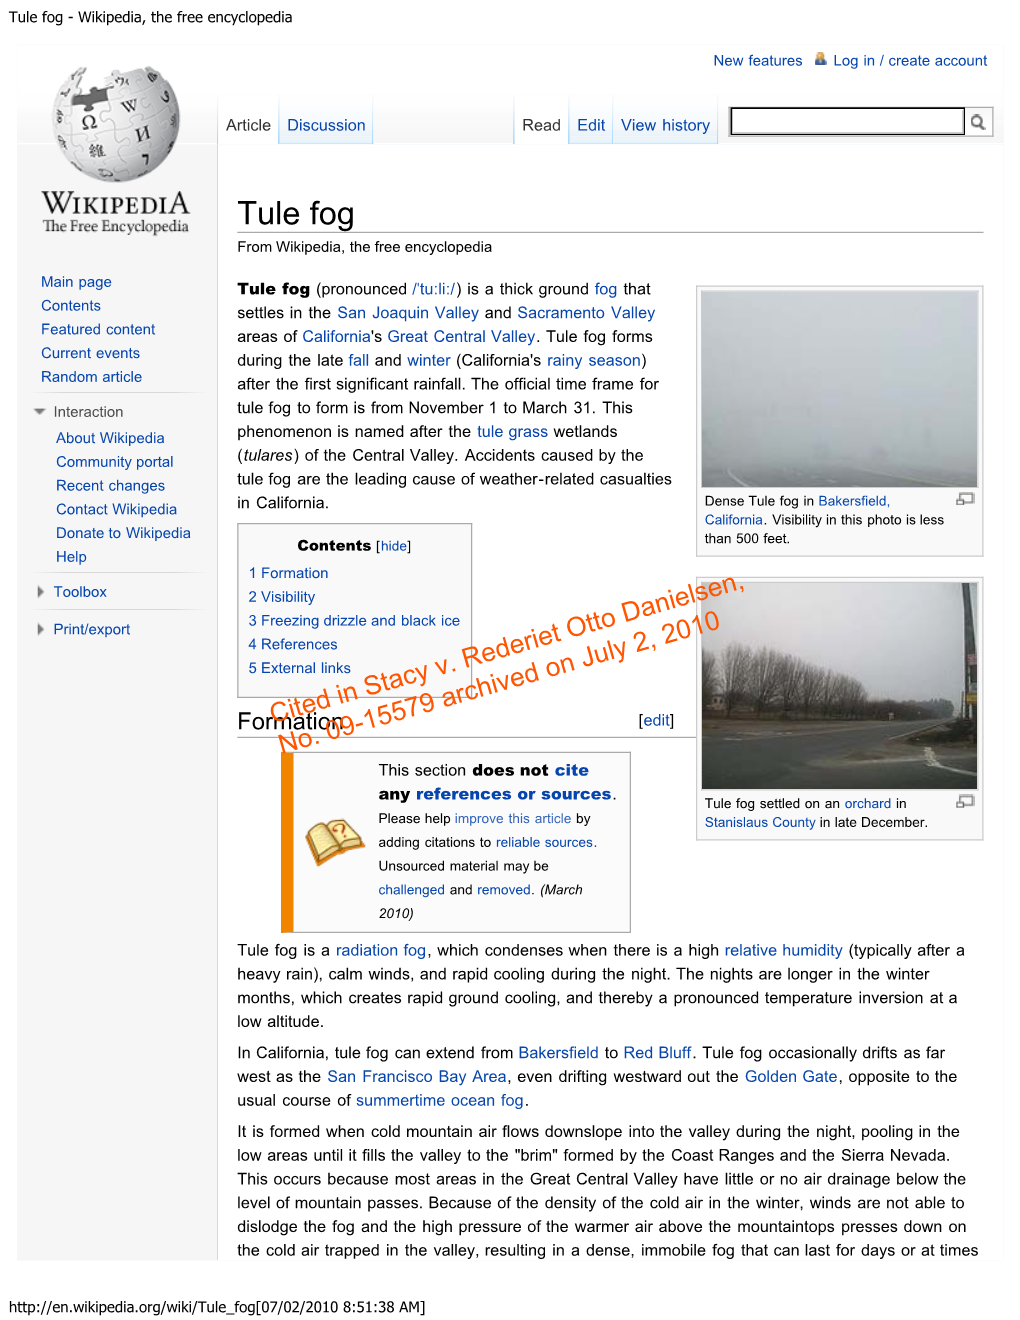 Tule Fog - Wikipedia, the Free Encyclopedia